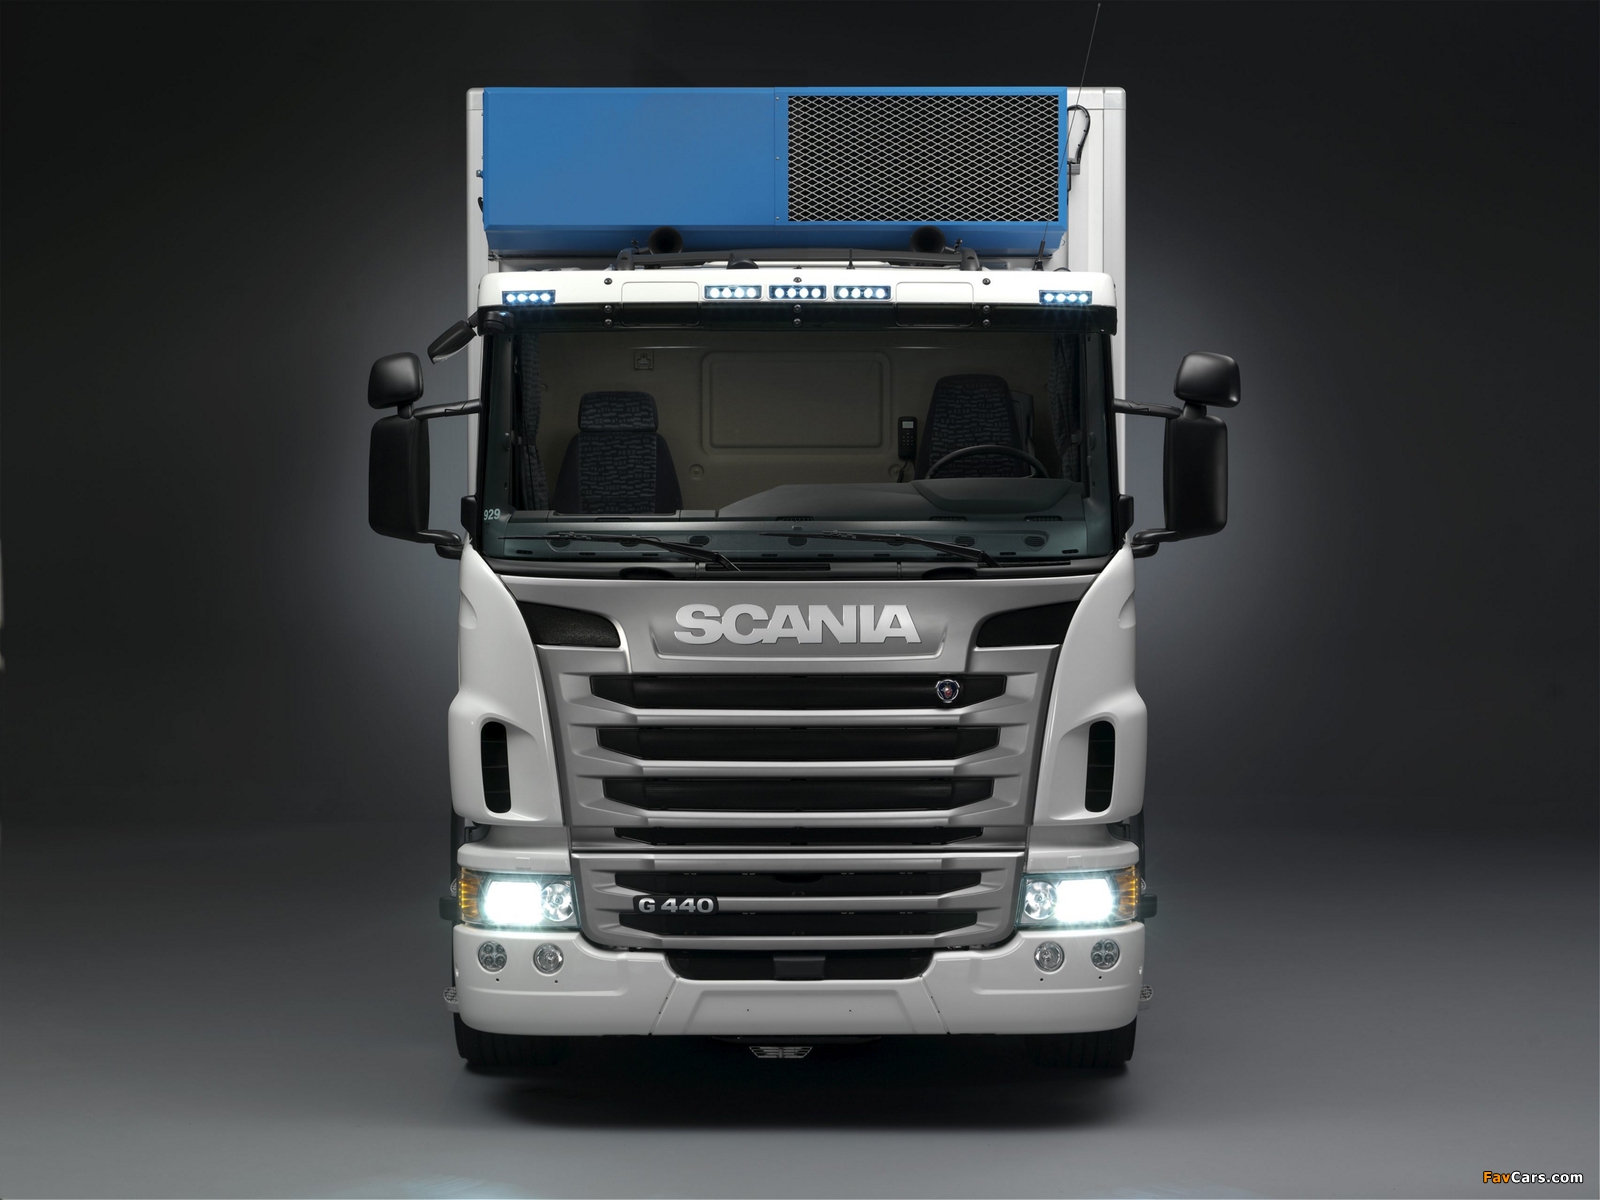 Scania g series. Scania g440. Scania g440 4x2. Scania g6x400. Scania g6x400 g440.